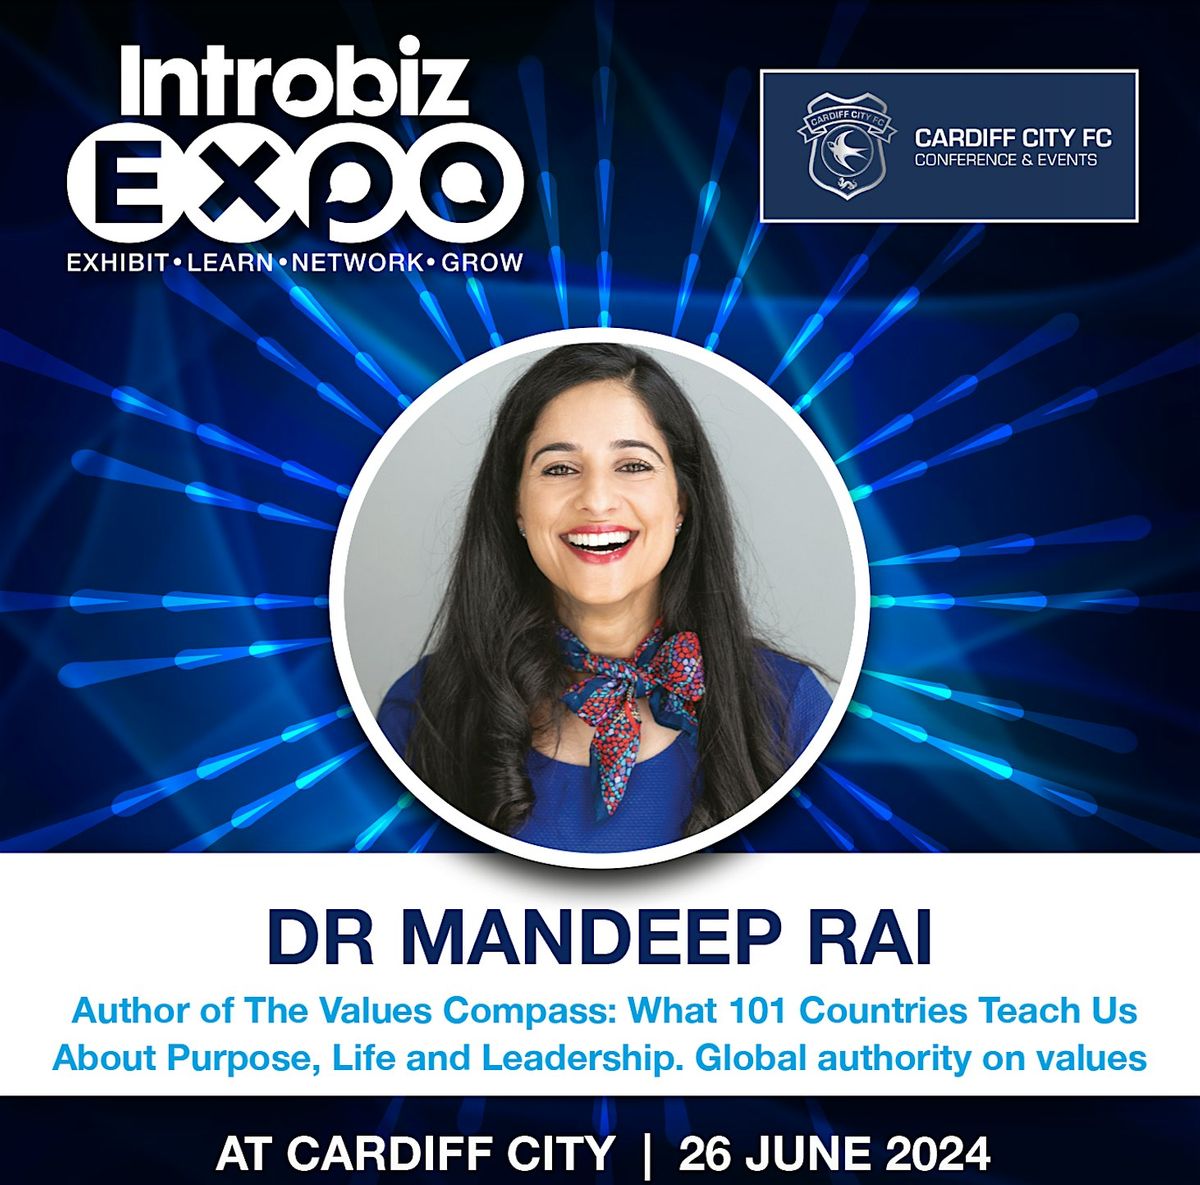 Introbiz Expo at Cardiff City Stadium, with Dr Mandeep Rai